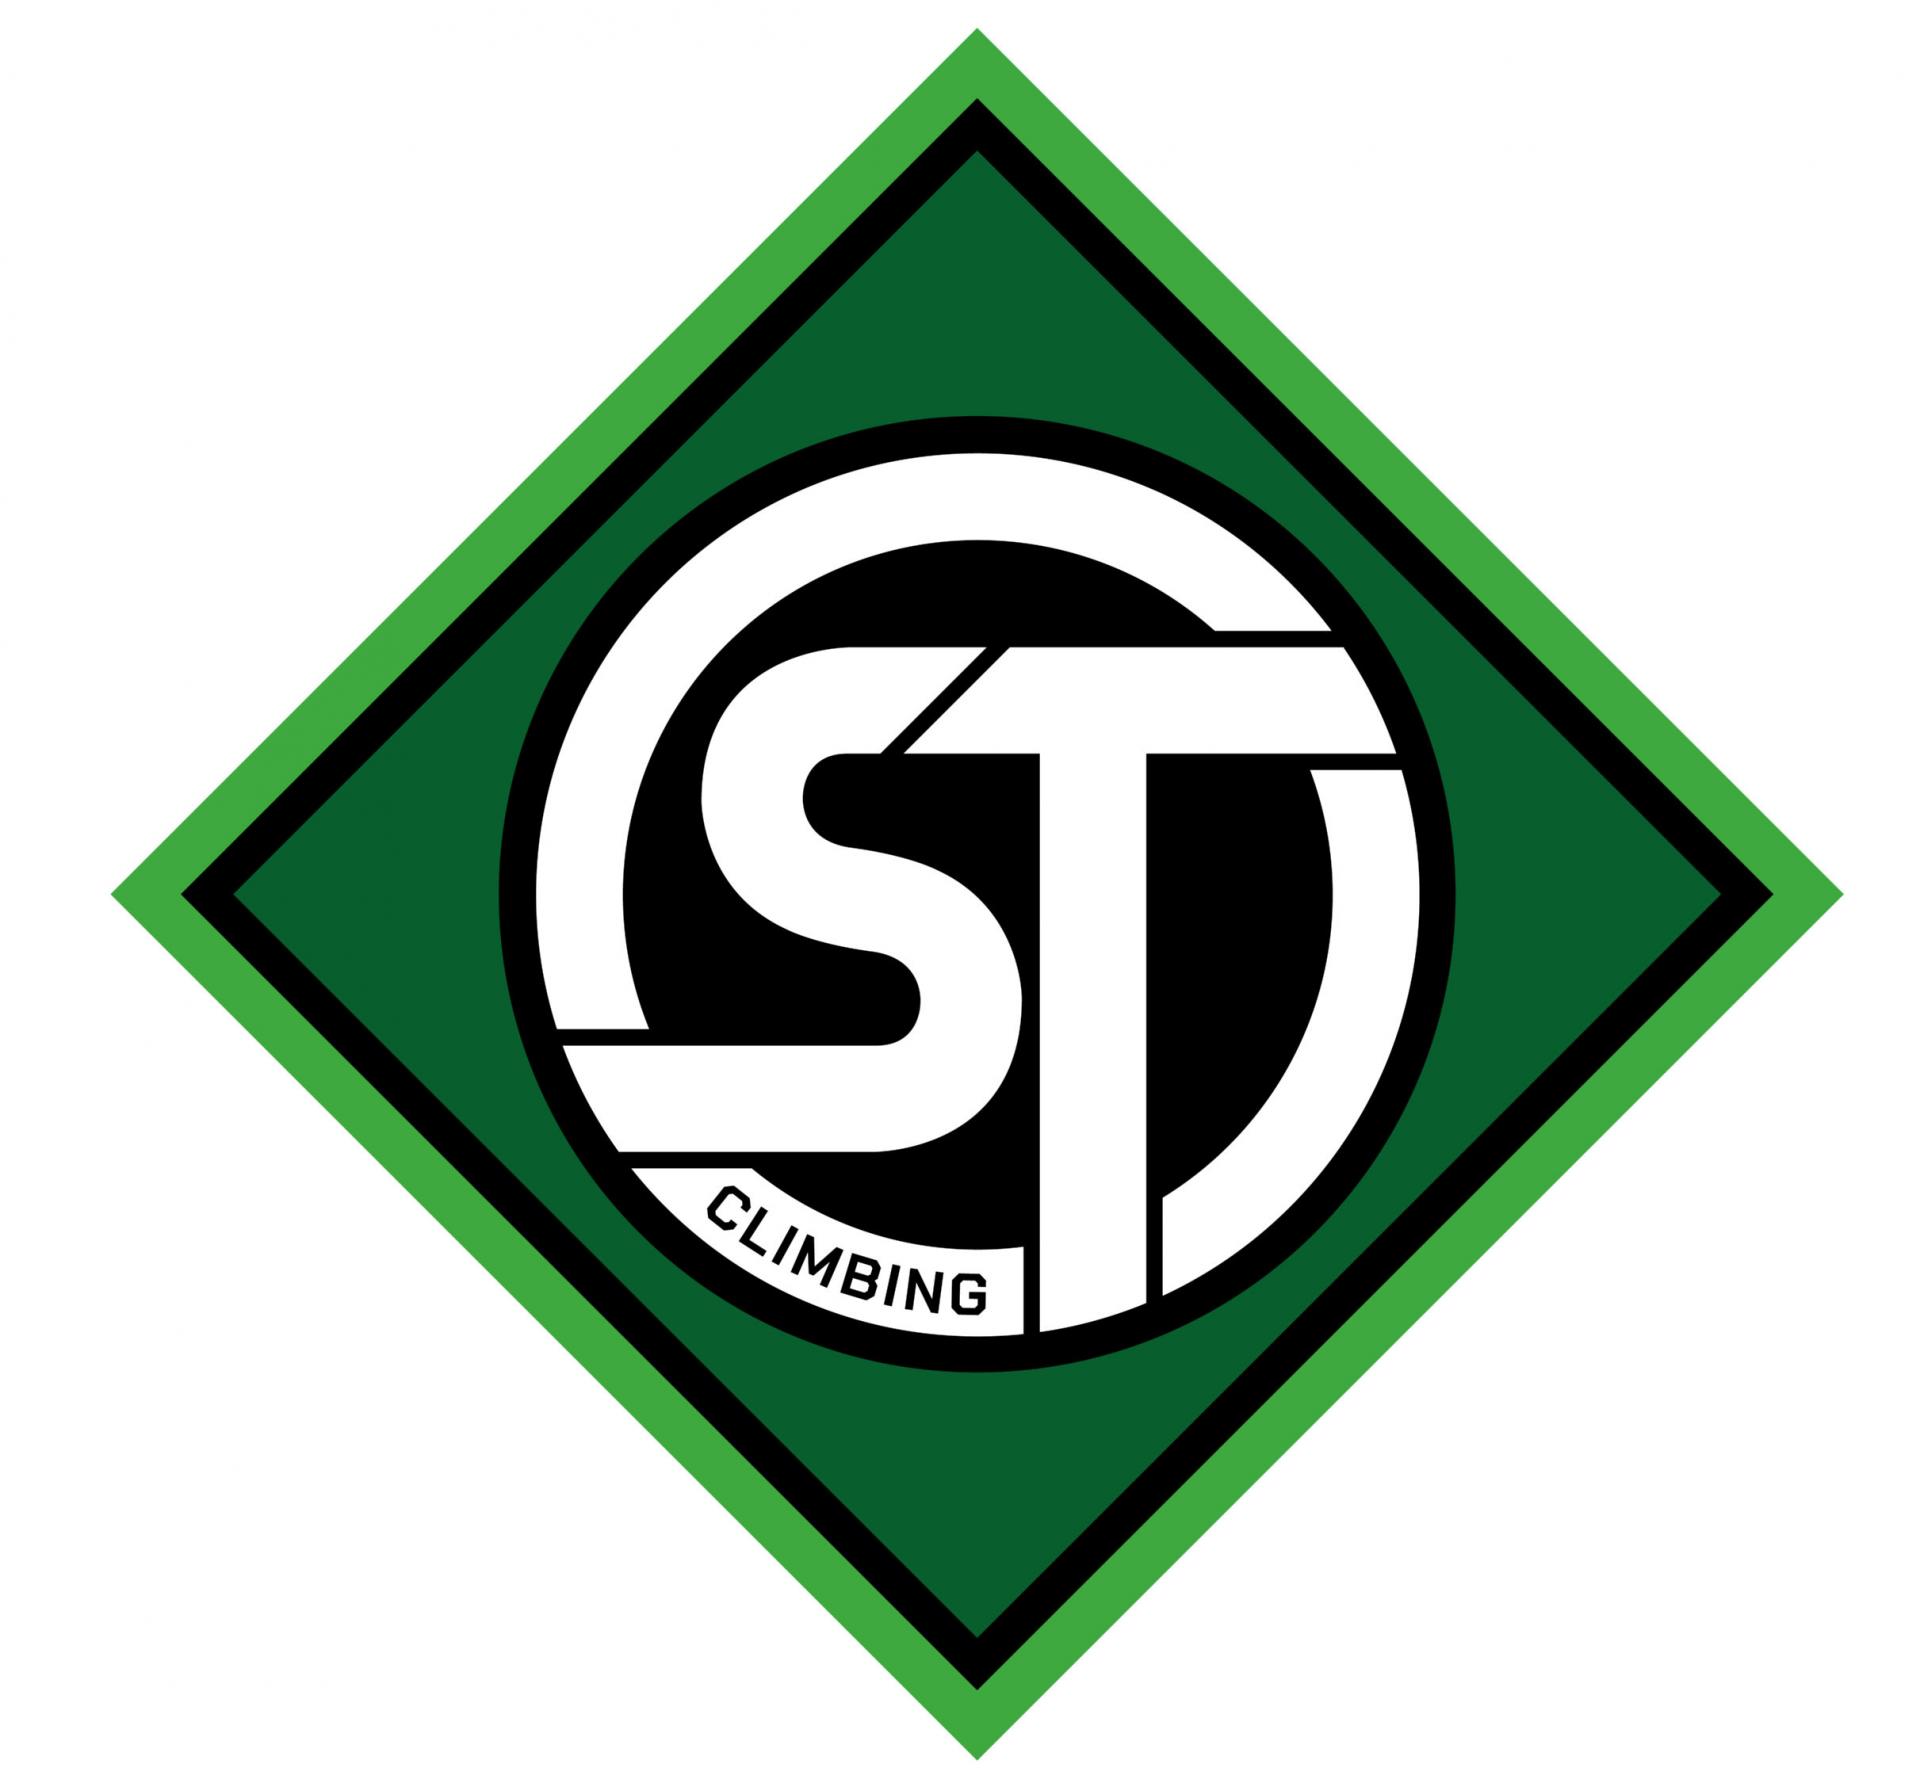 St climbing logo 02 2 1